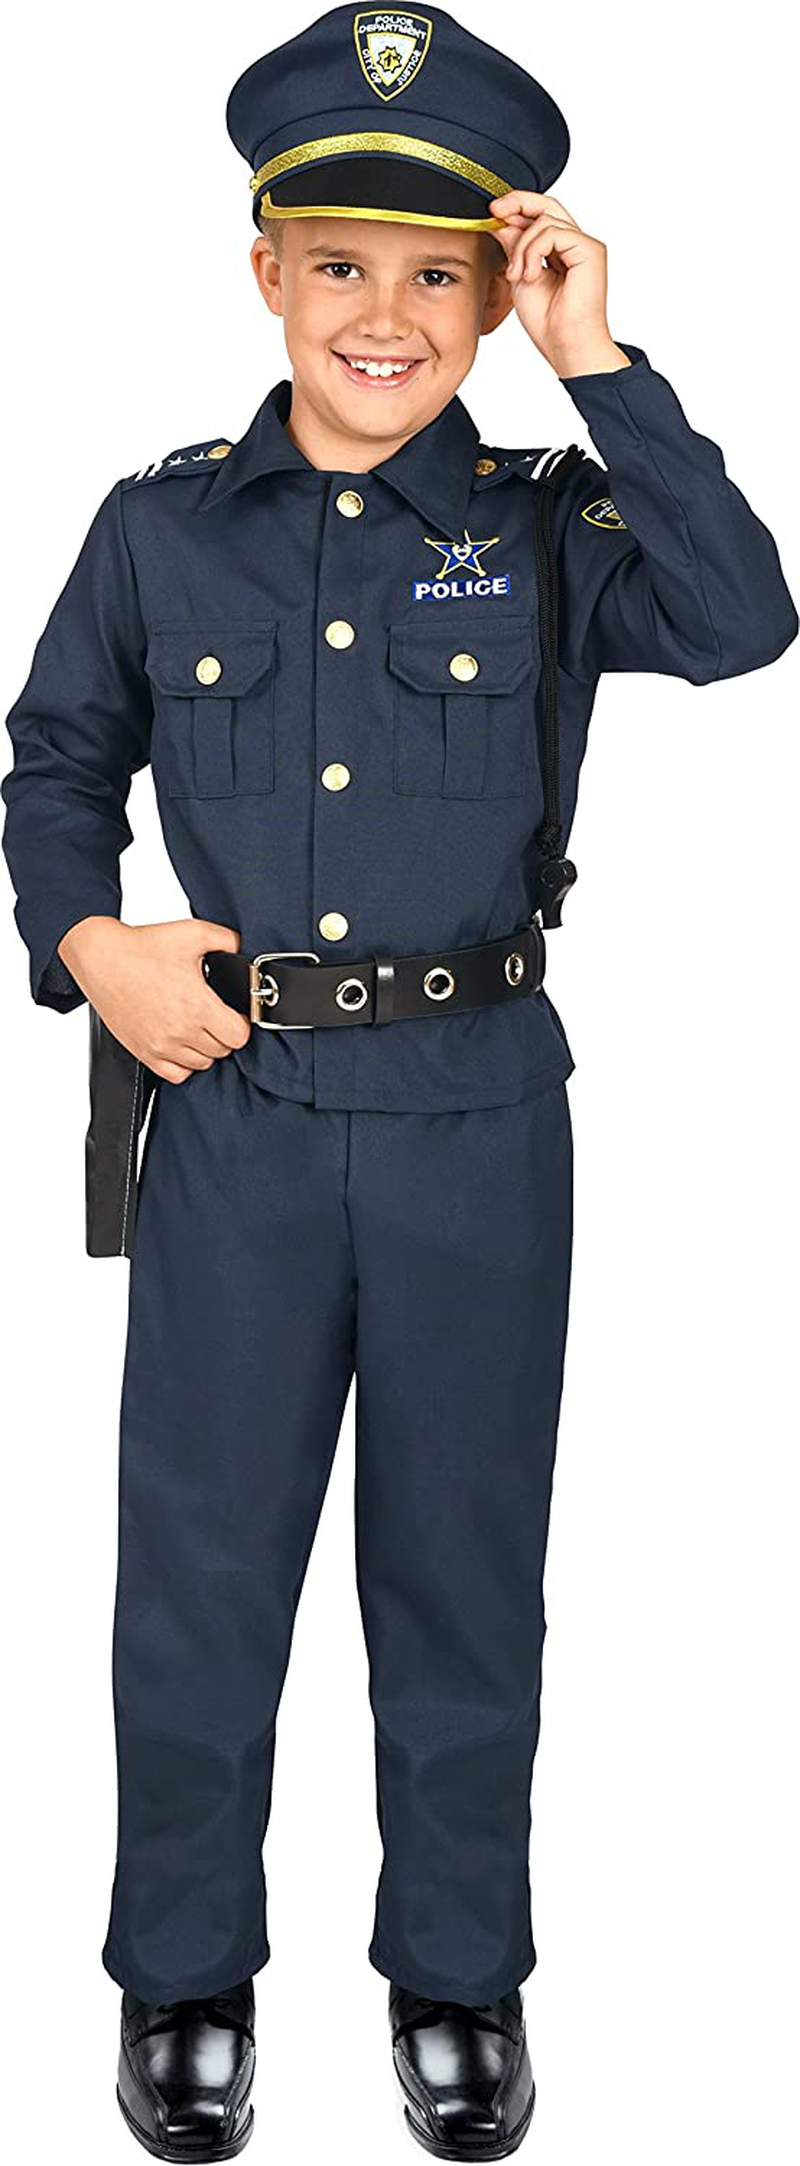 Kangaroo's Deluxe Boys Police Costume for Kids Apparel & Accessories > Costumes & Accessories > Costumes KANGAROO Medium 8-10  